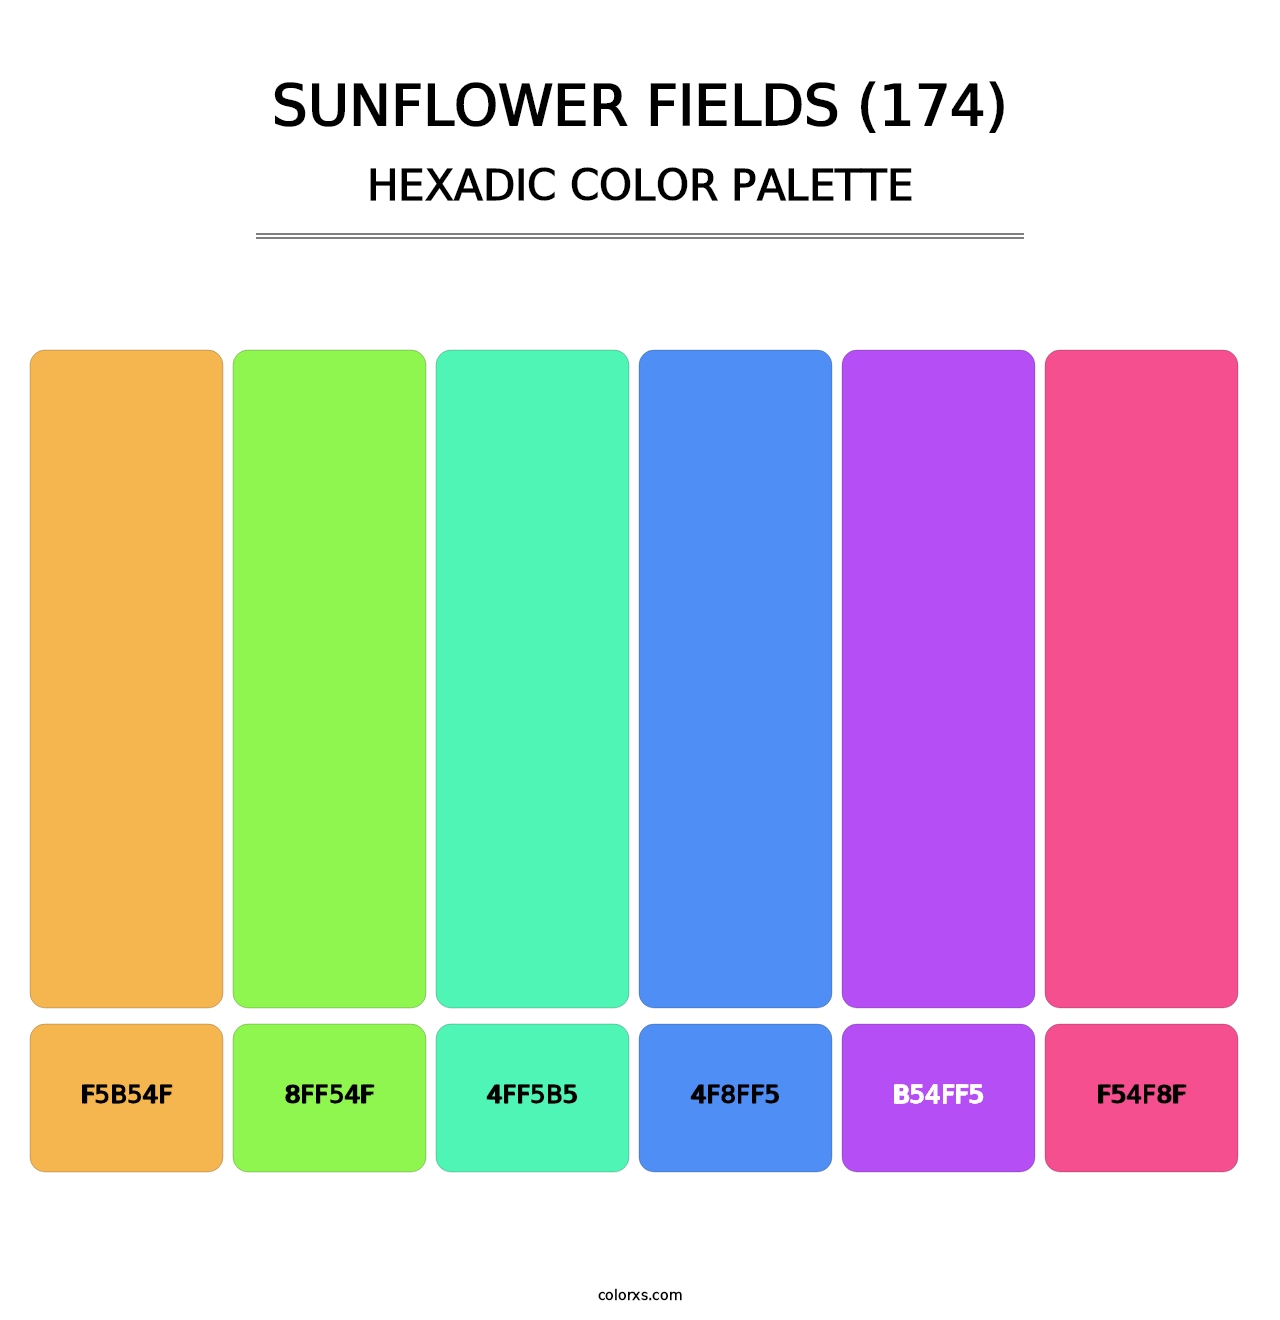 Sunflower Fields (174) - Hexadic Color Palette